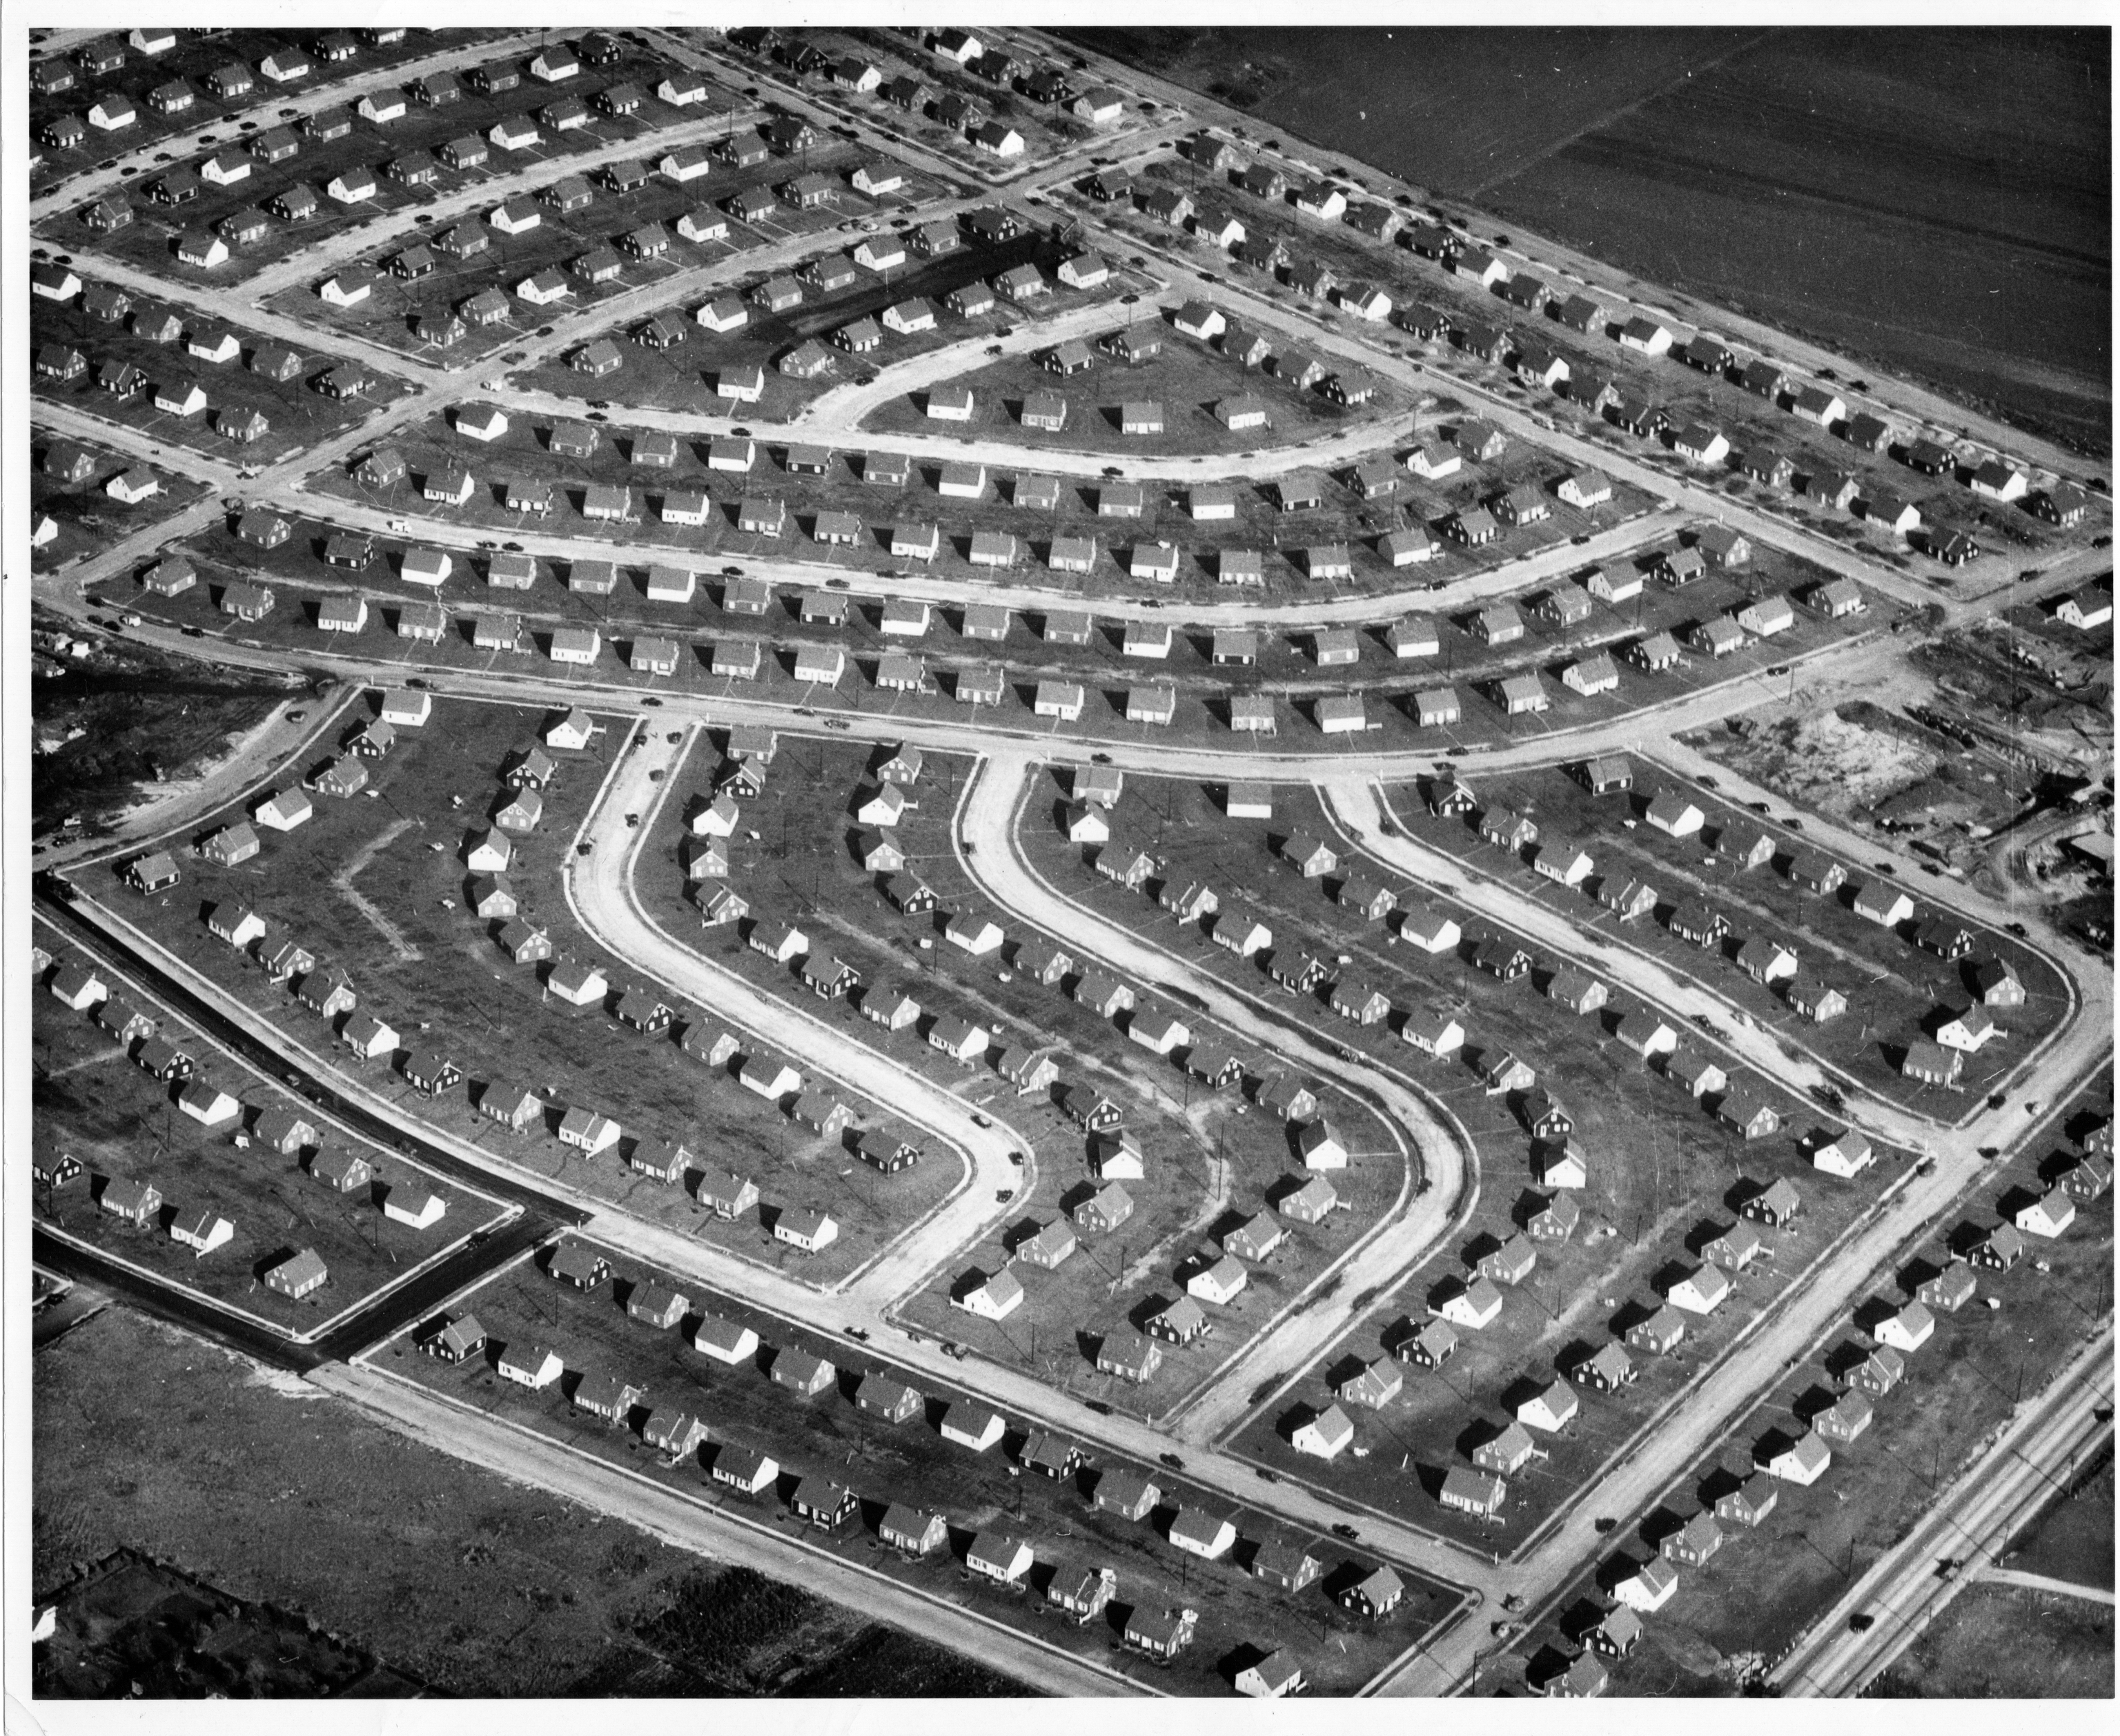 Vista area de Levittown, un suburbio de 1949.